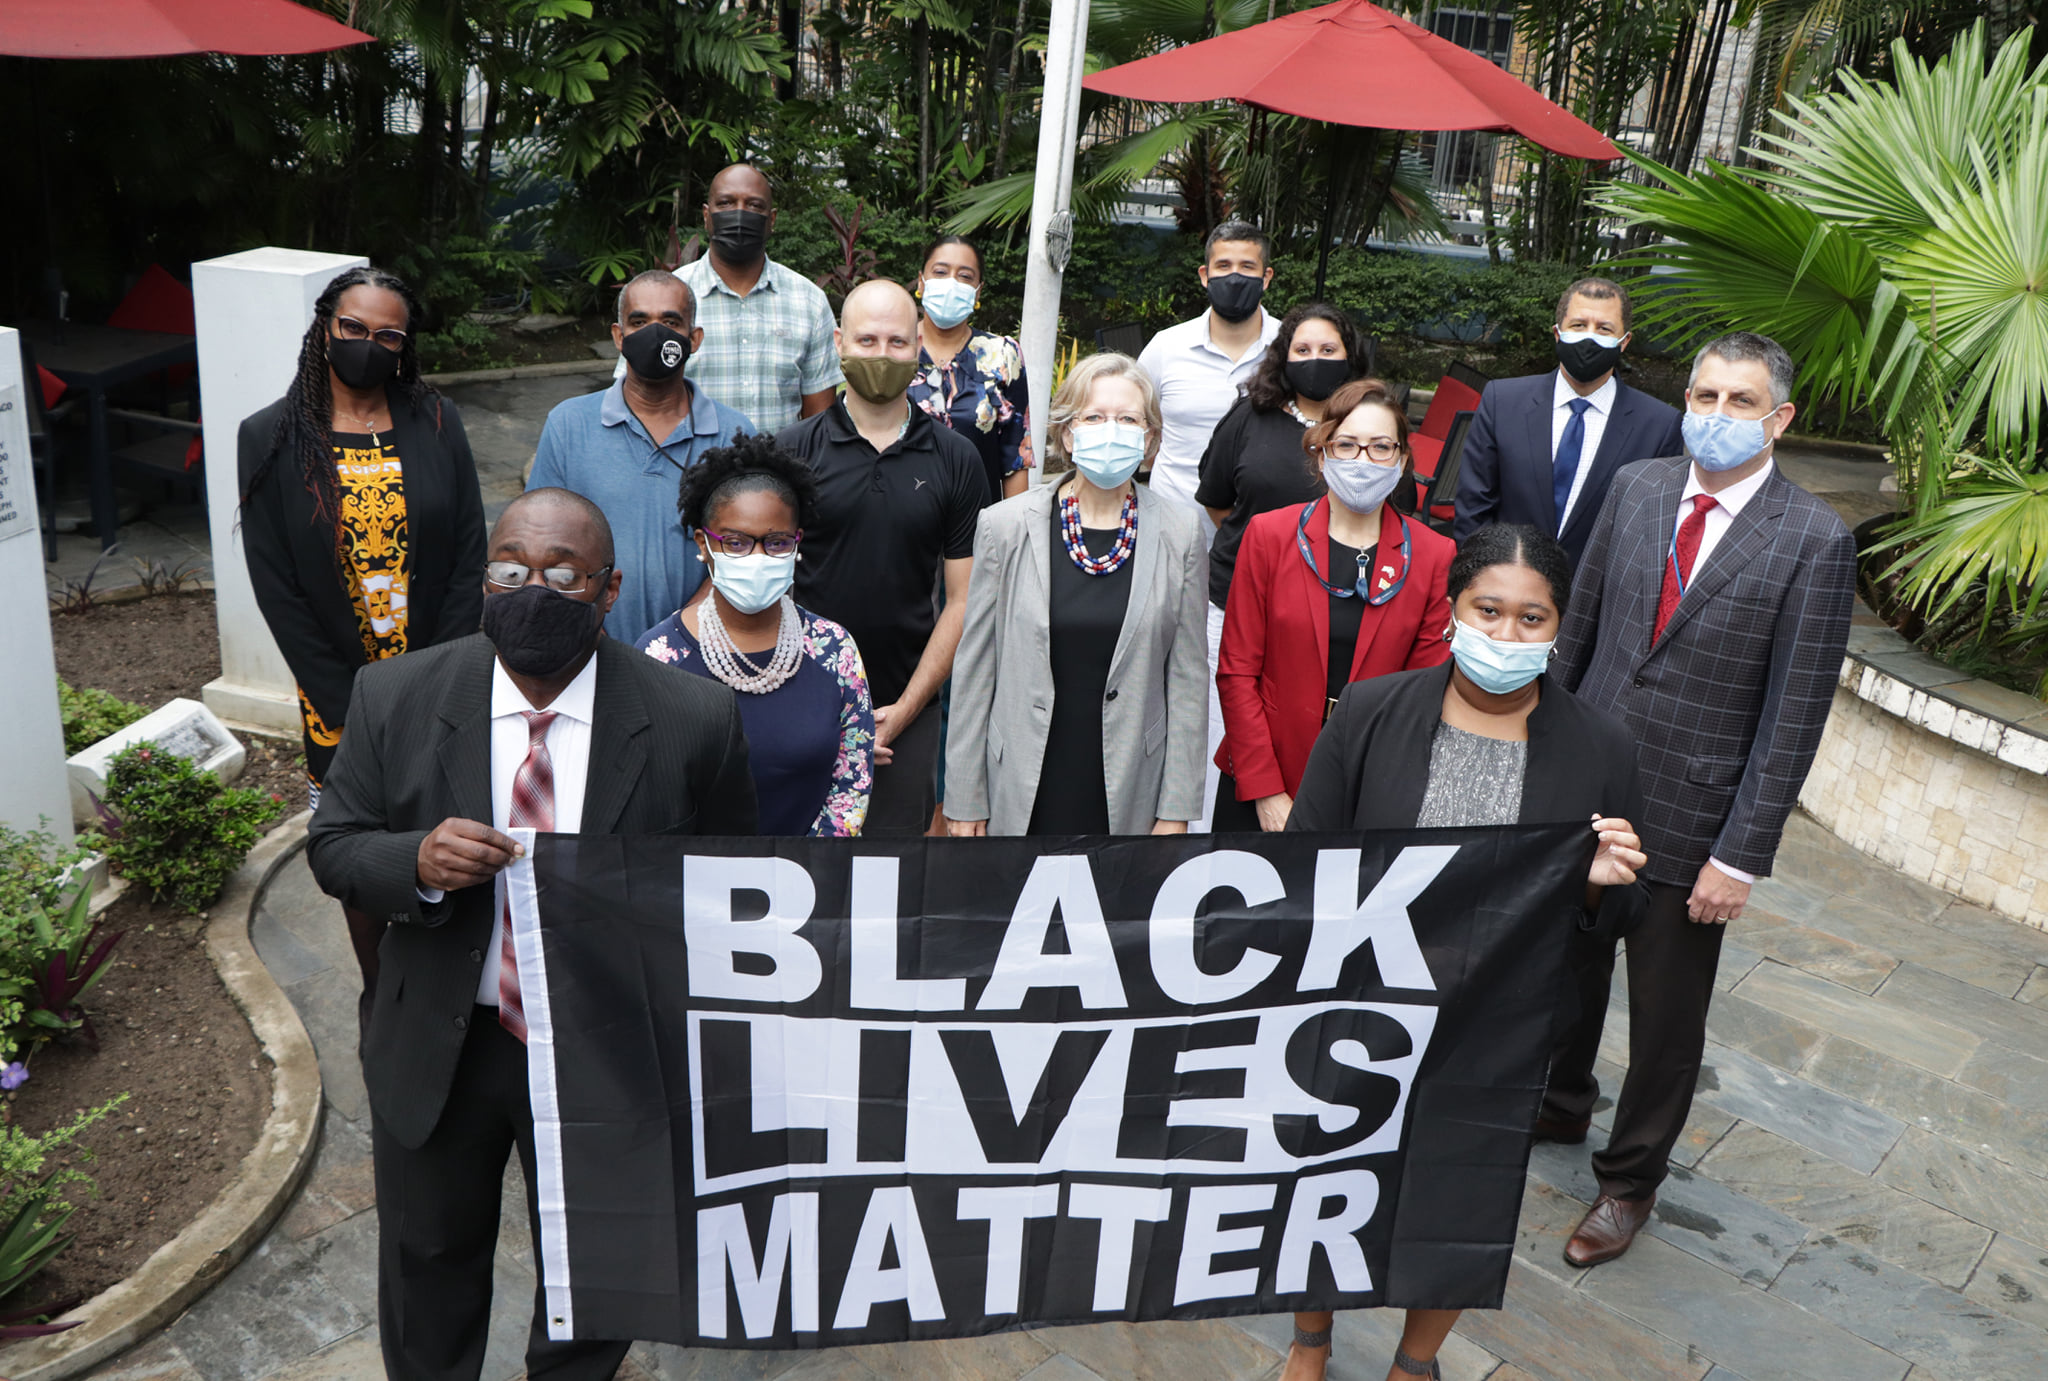 US Embassy in TT flies Black Lives Matter flag